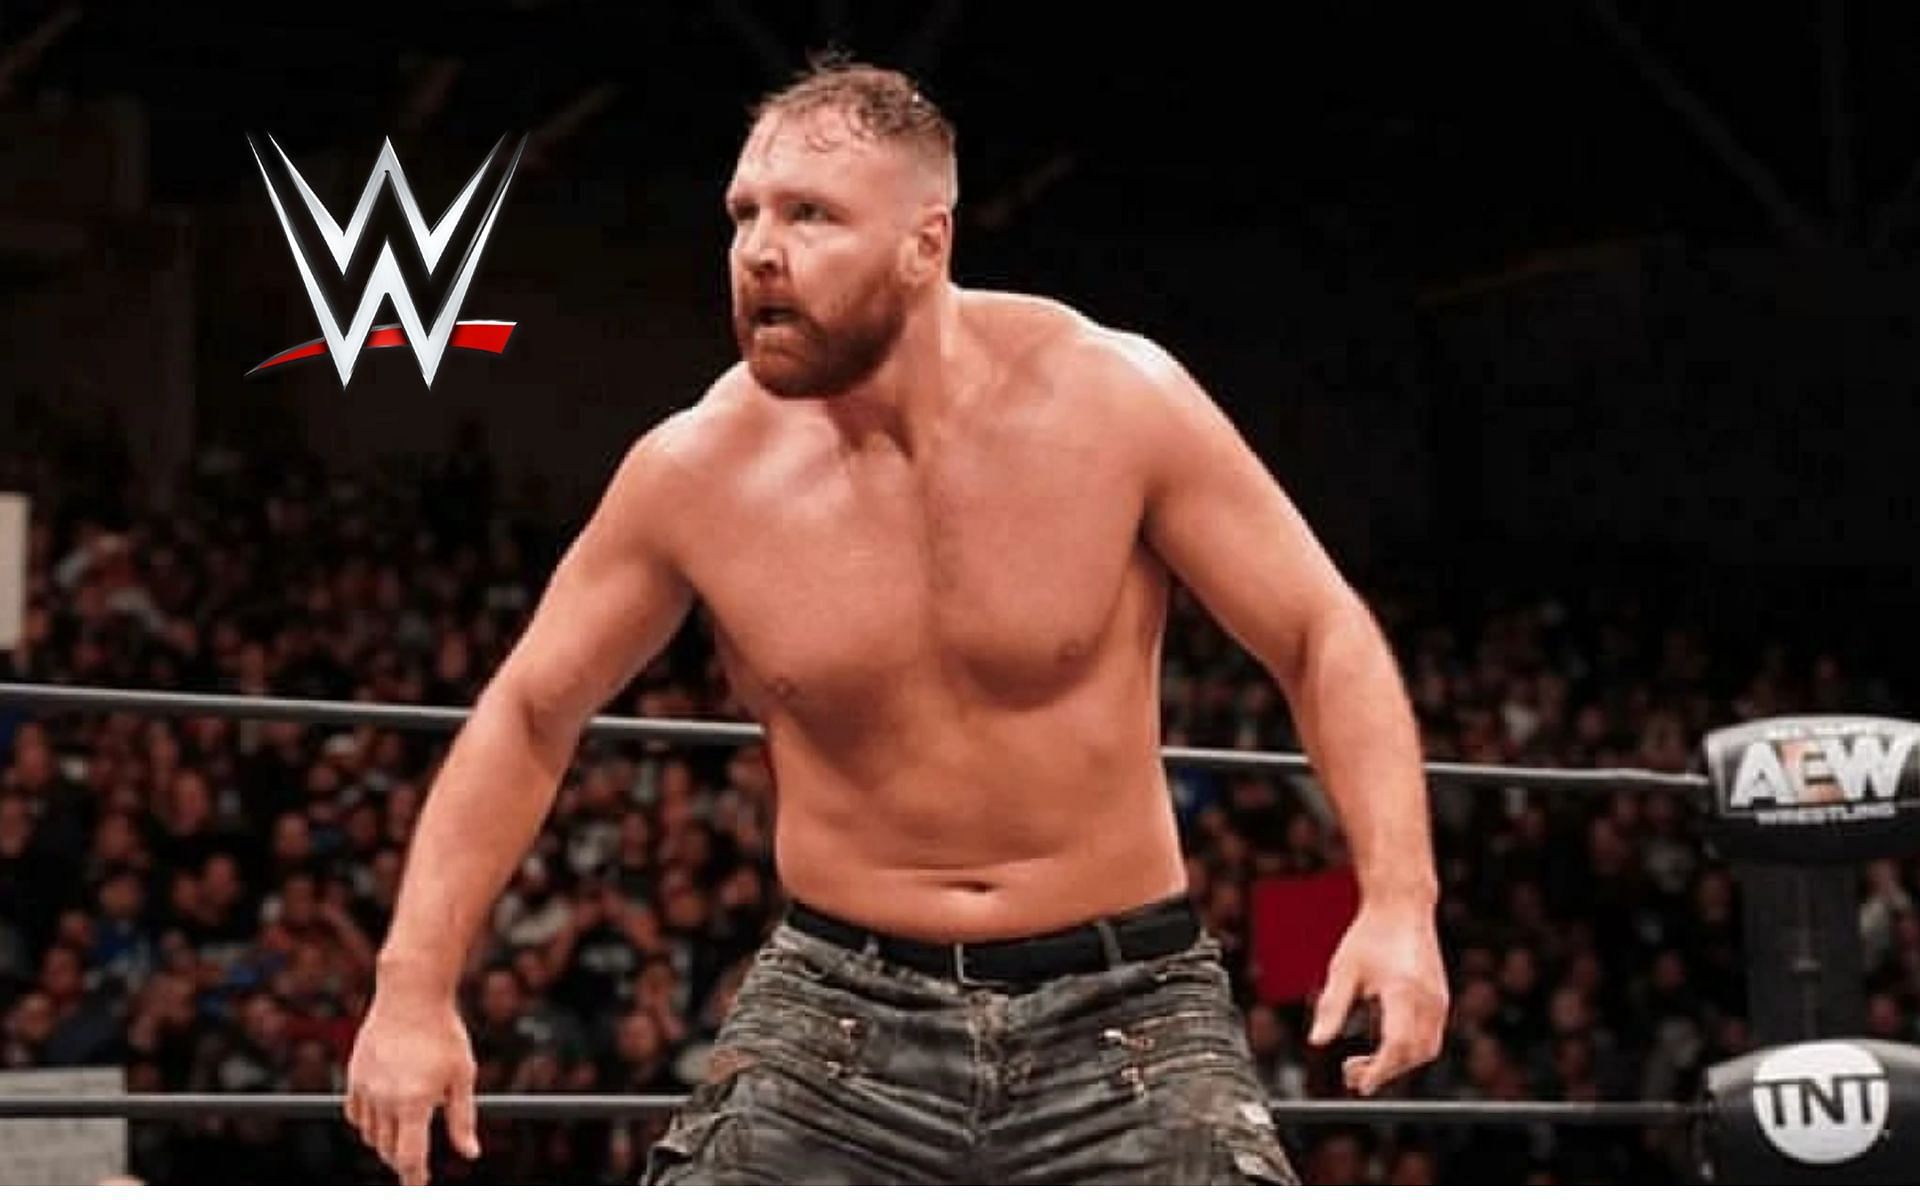 Jon Moxley wrestled against a former WWE competitor on AEW Dynamite last week.